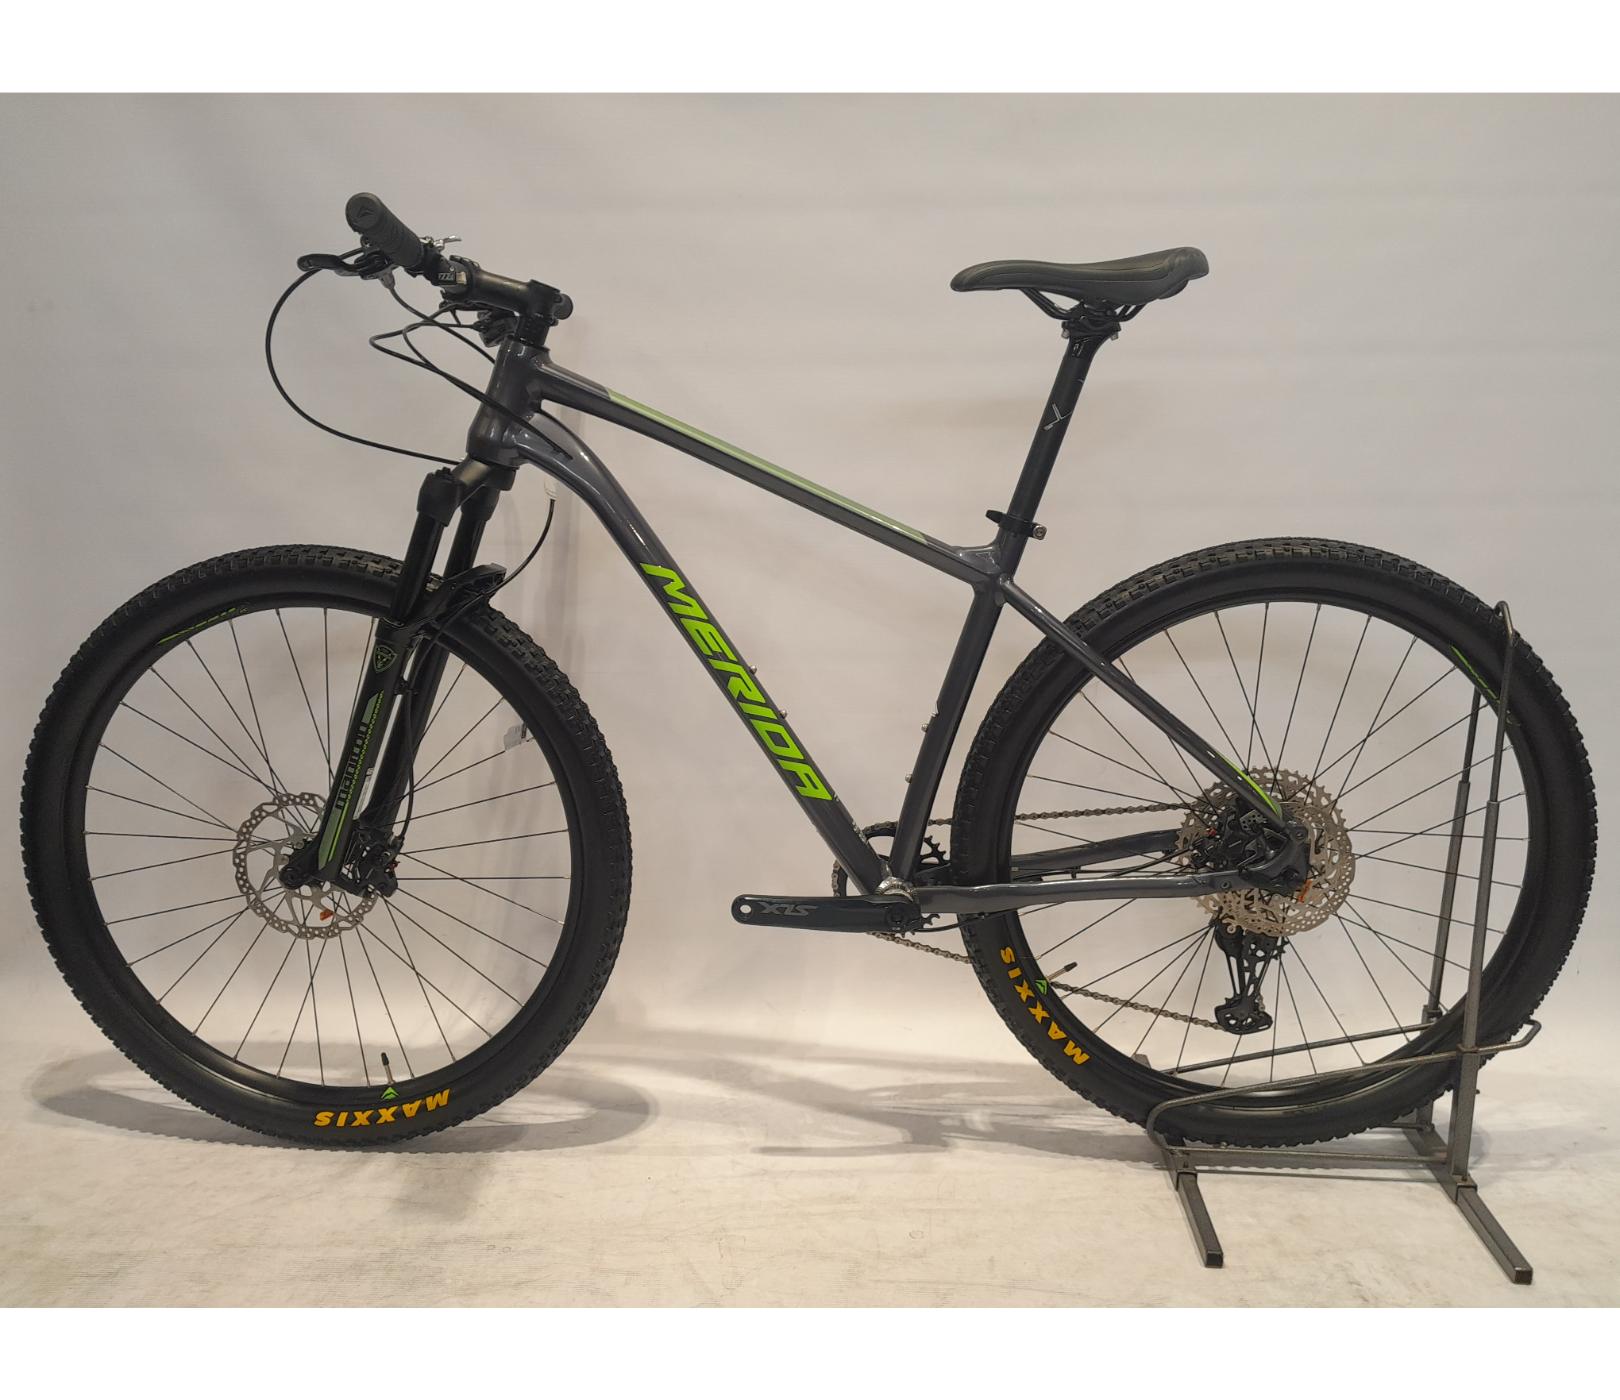 Pre-Owned Merida Big Nine SLX Aluminium Hardtail Mountain Bike - Large